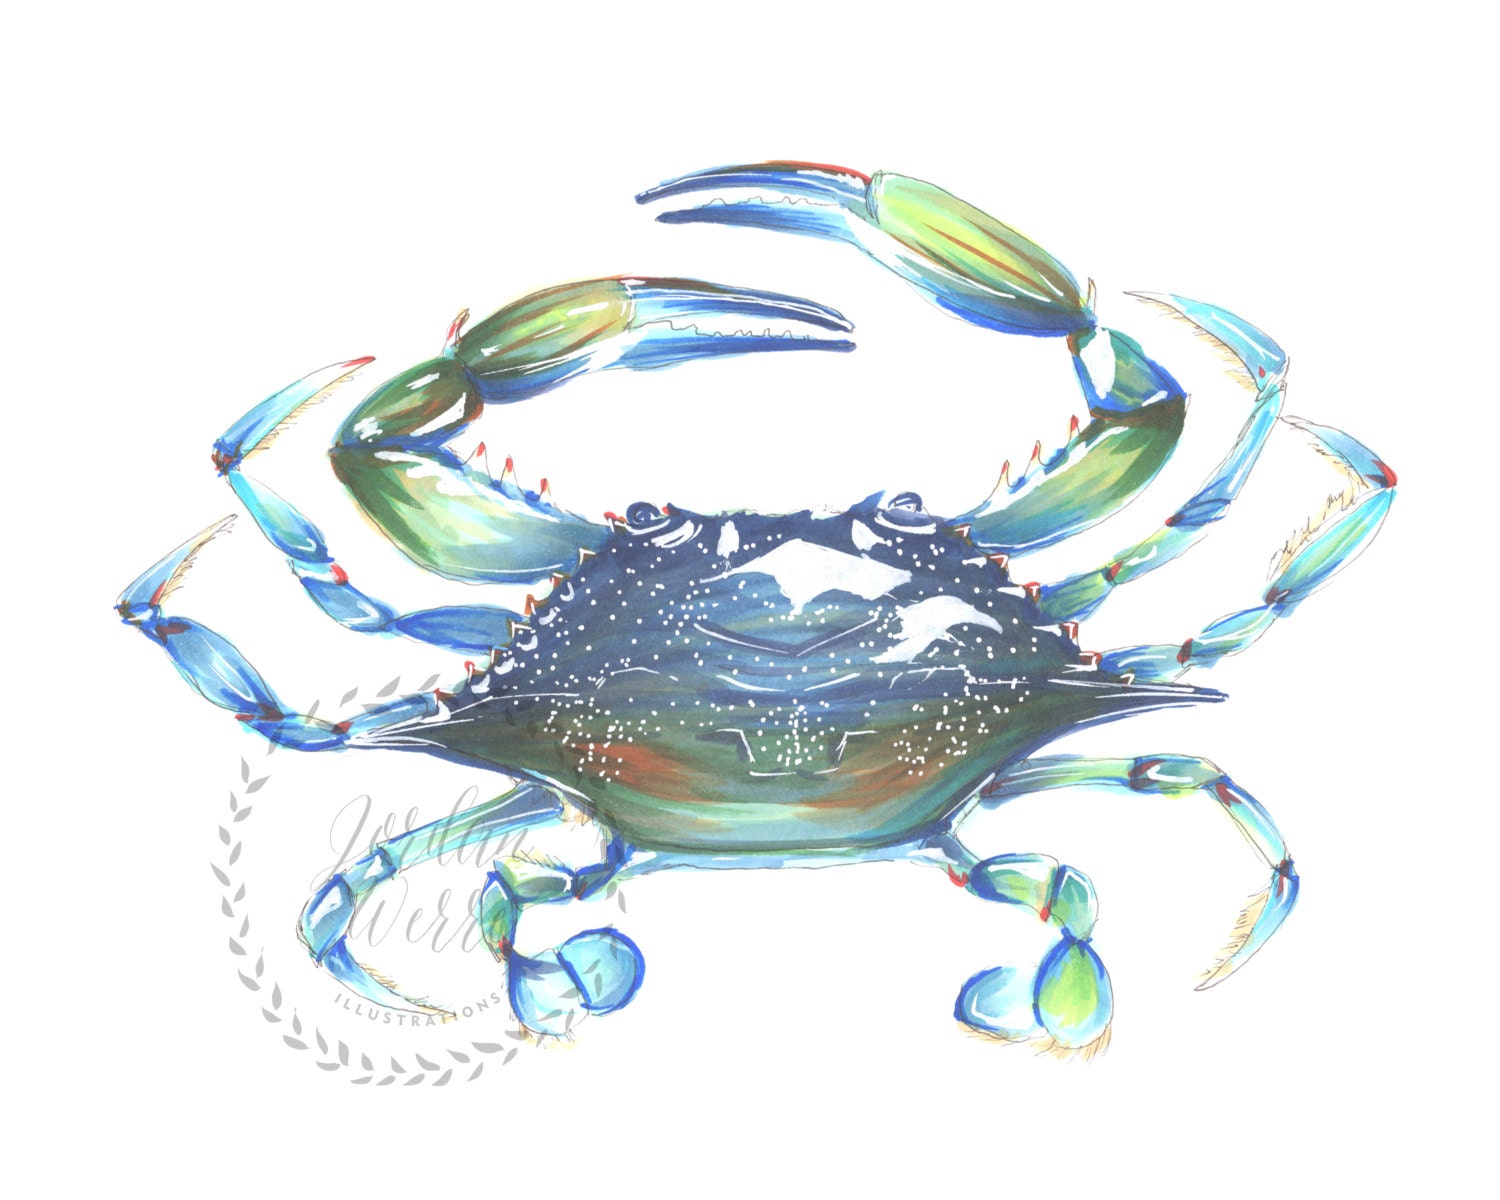 Maryland blue crab illustration print 8x10